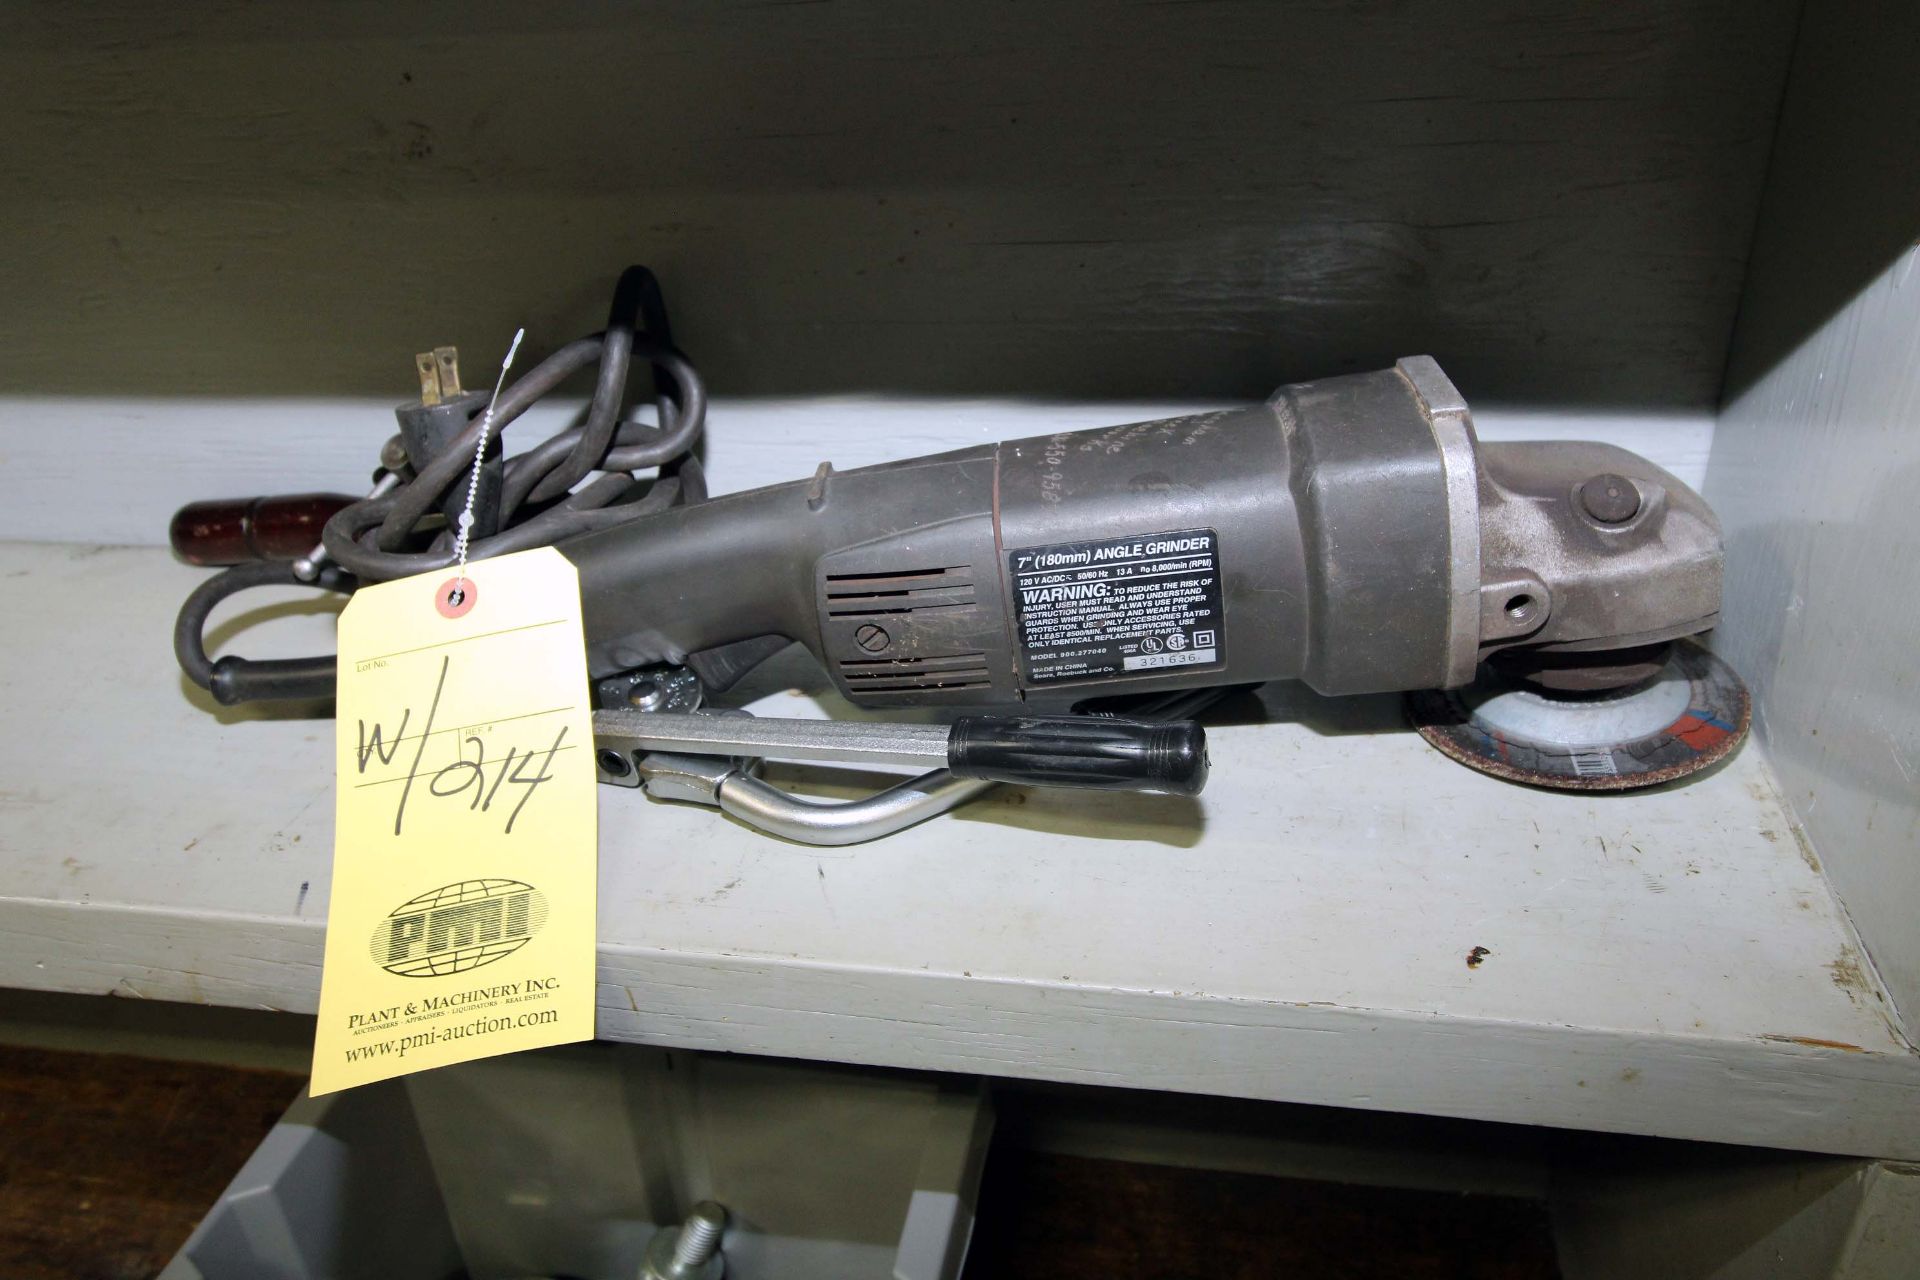 LOT CONSISTING OF: Dewalt Mdl. DW236 electric drill, hole saws, Craftsman 7" grinder, 5/16" tubing - Image 2 of 3